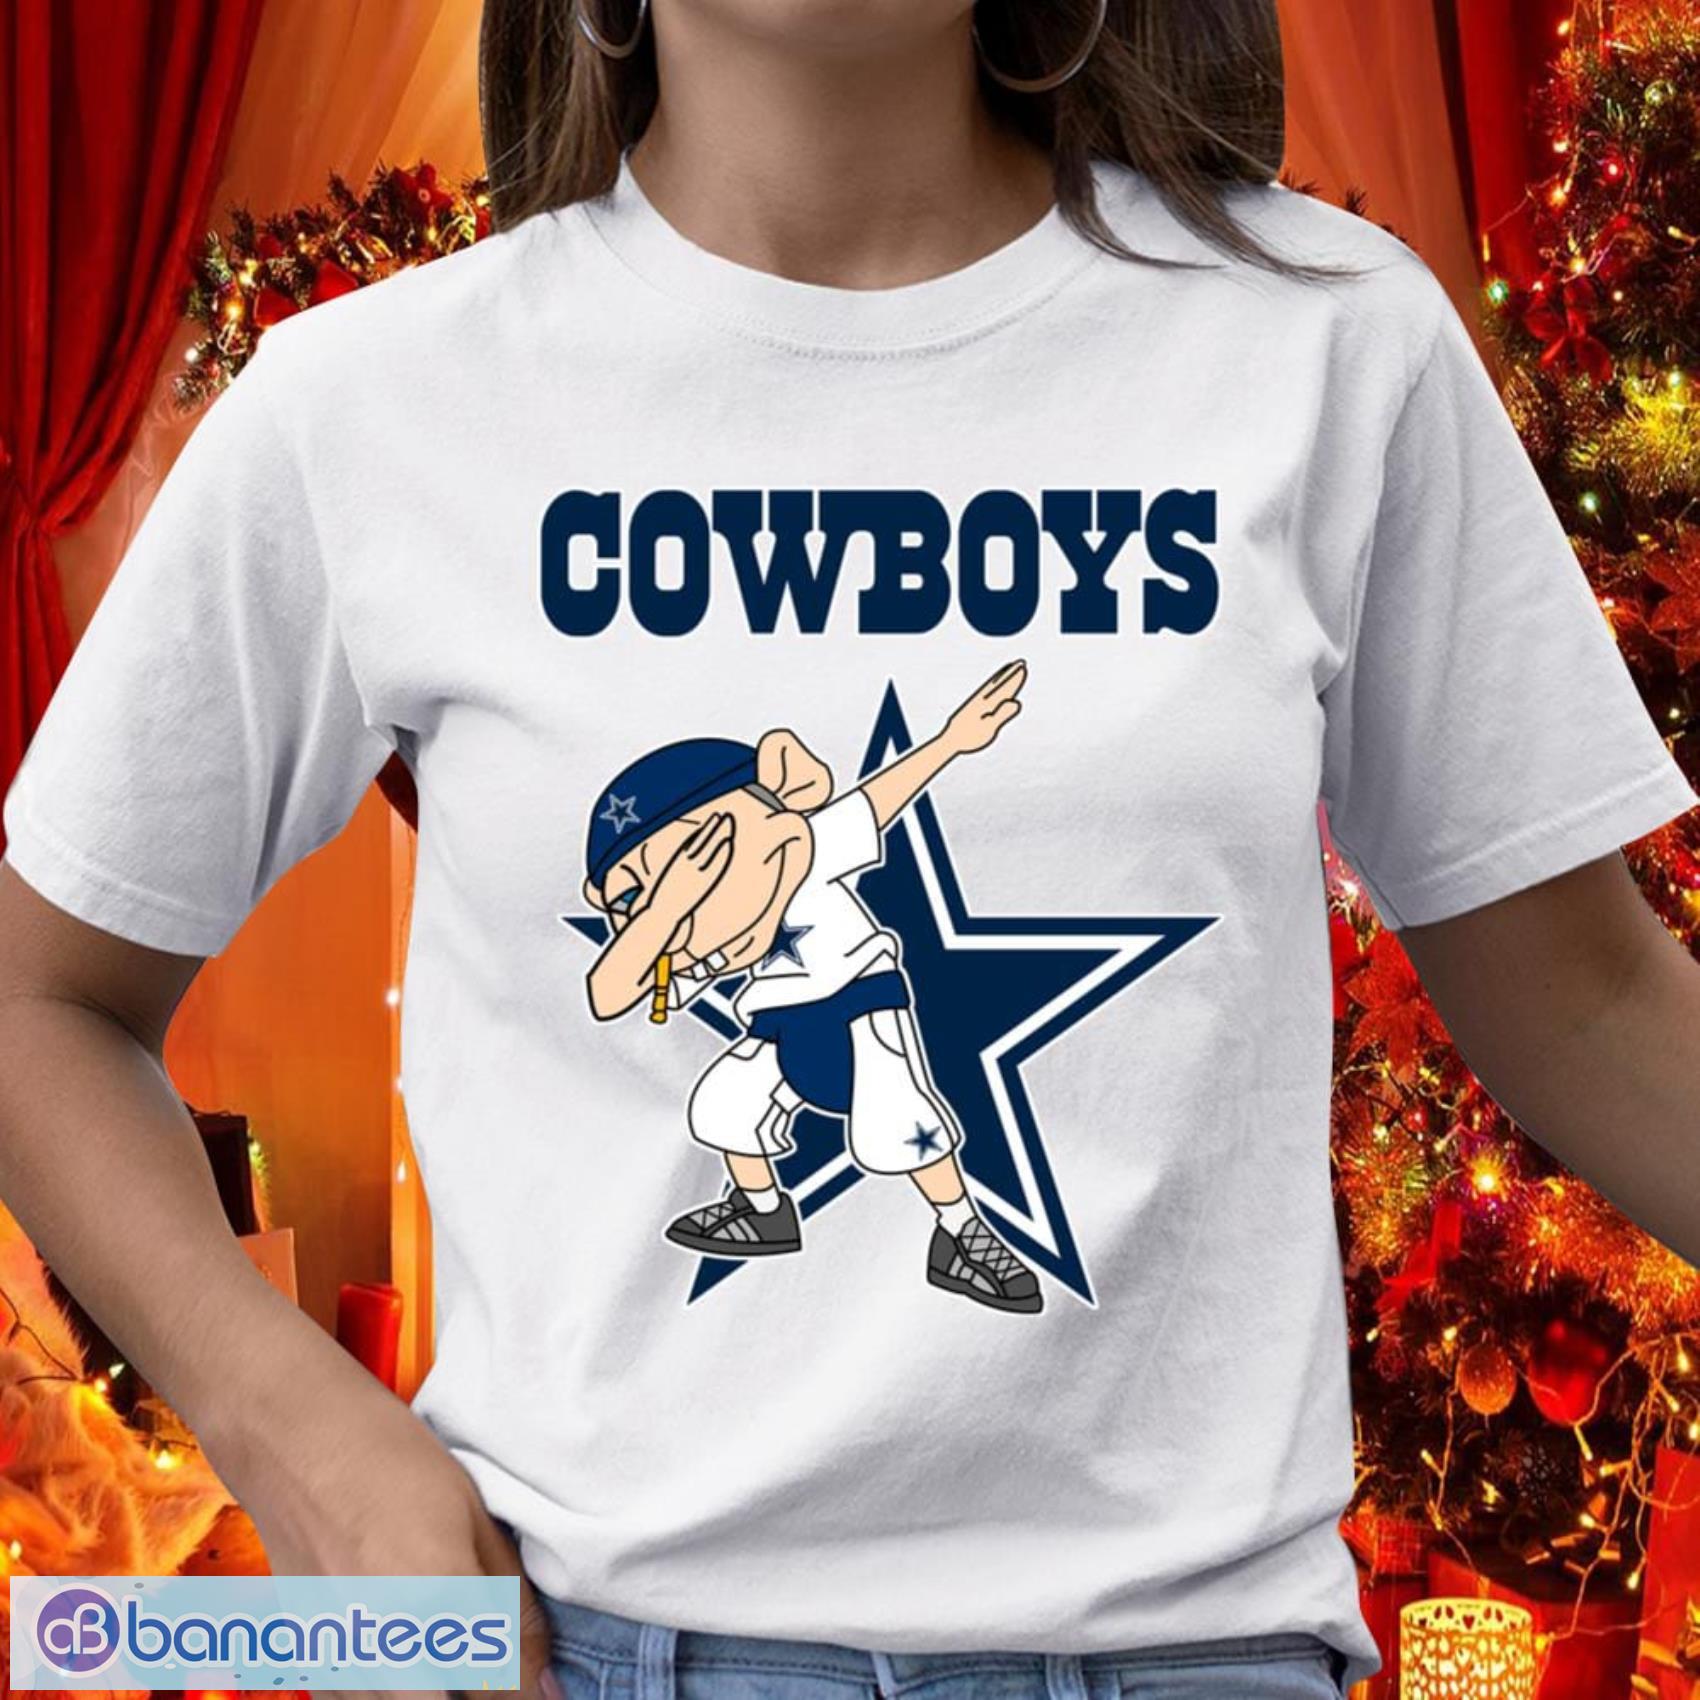 dallas cowboys fan shirt